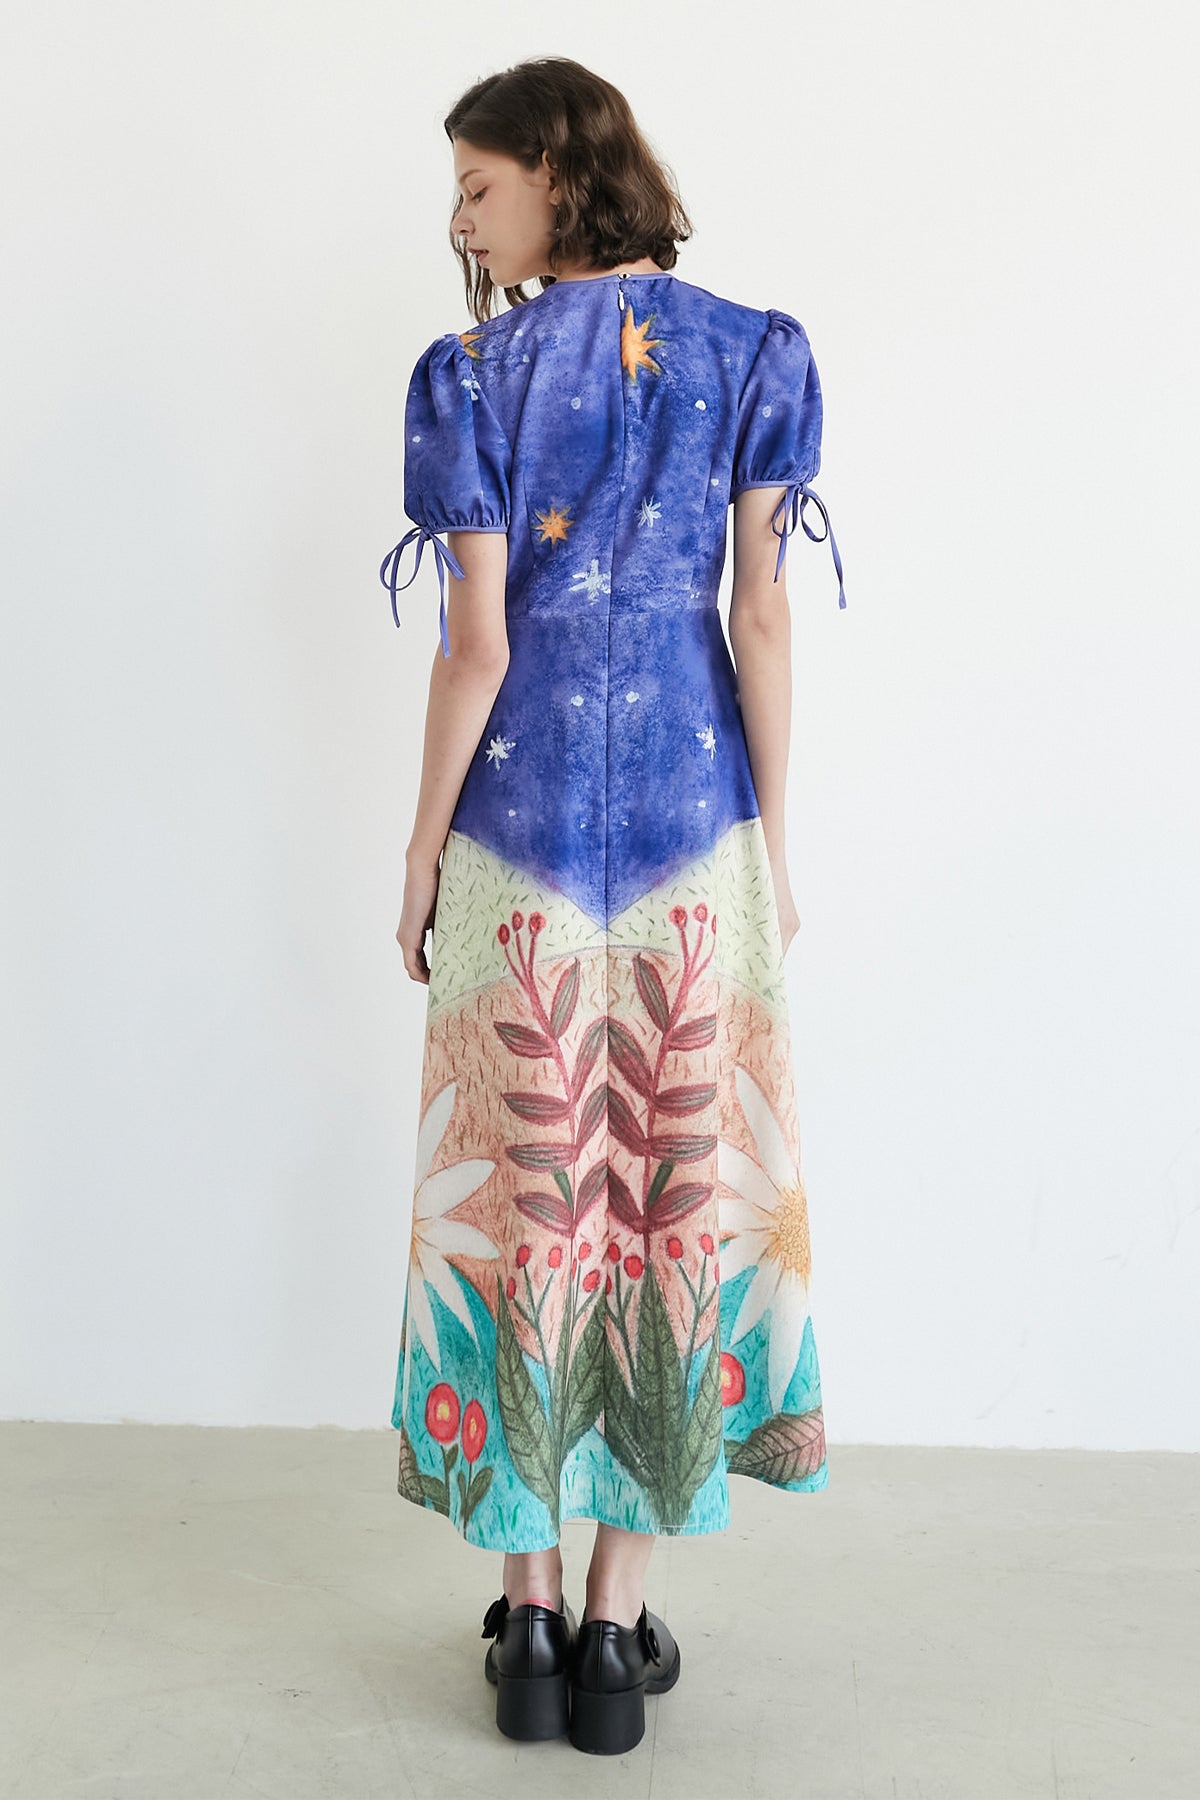 XUNRUO | Starry Night Print Maxi Dress